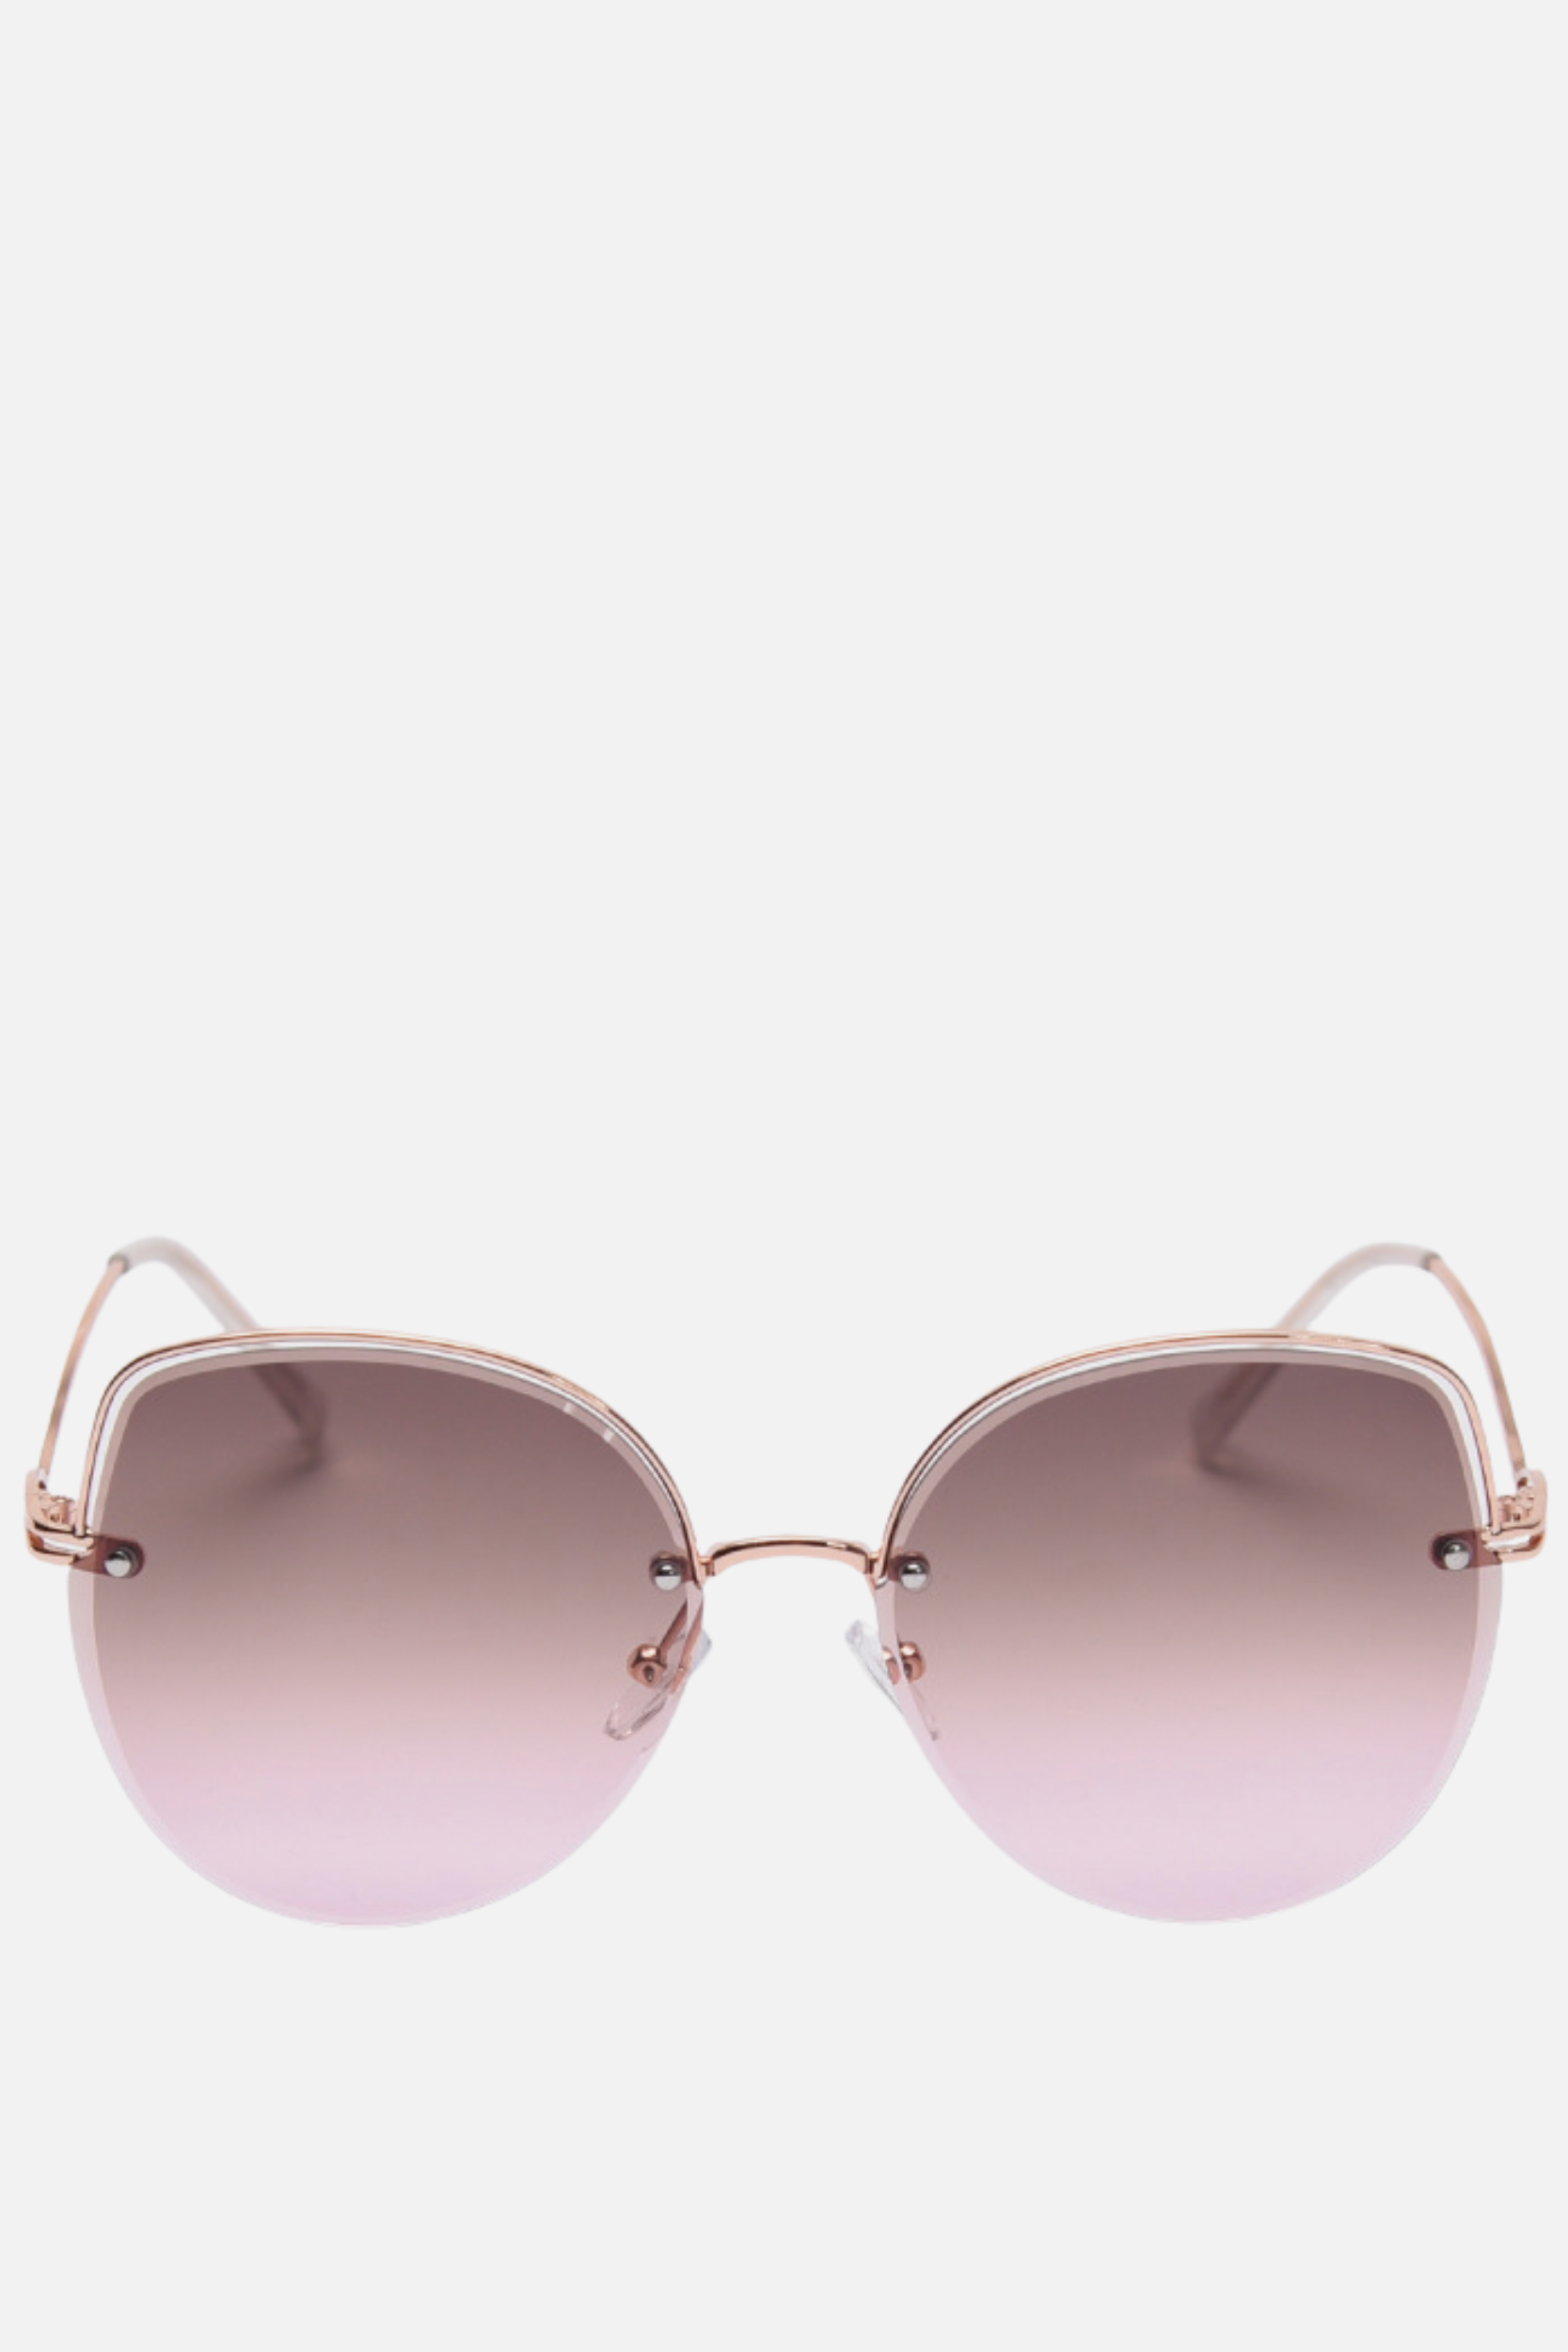 BORA BORA Round Pink Tint Sunglasses